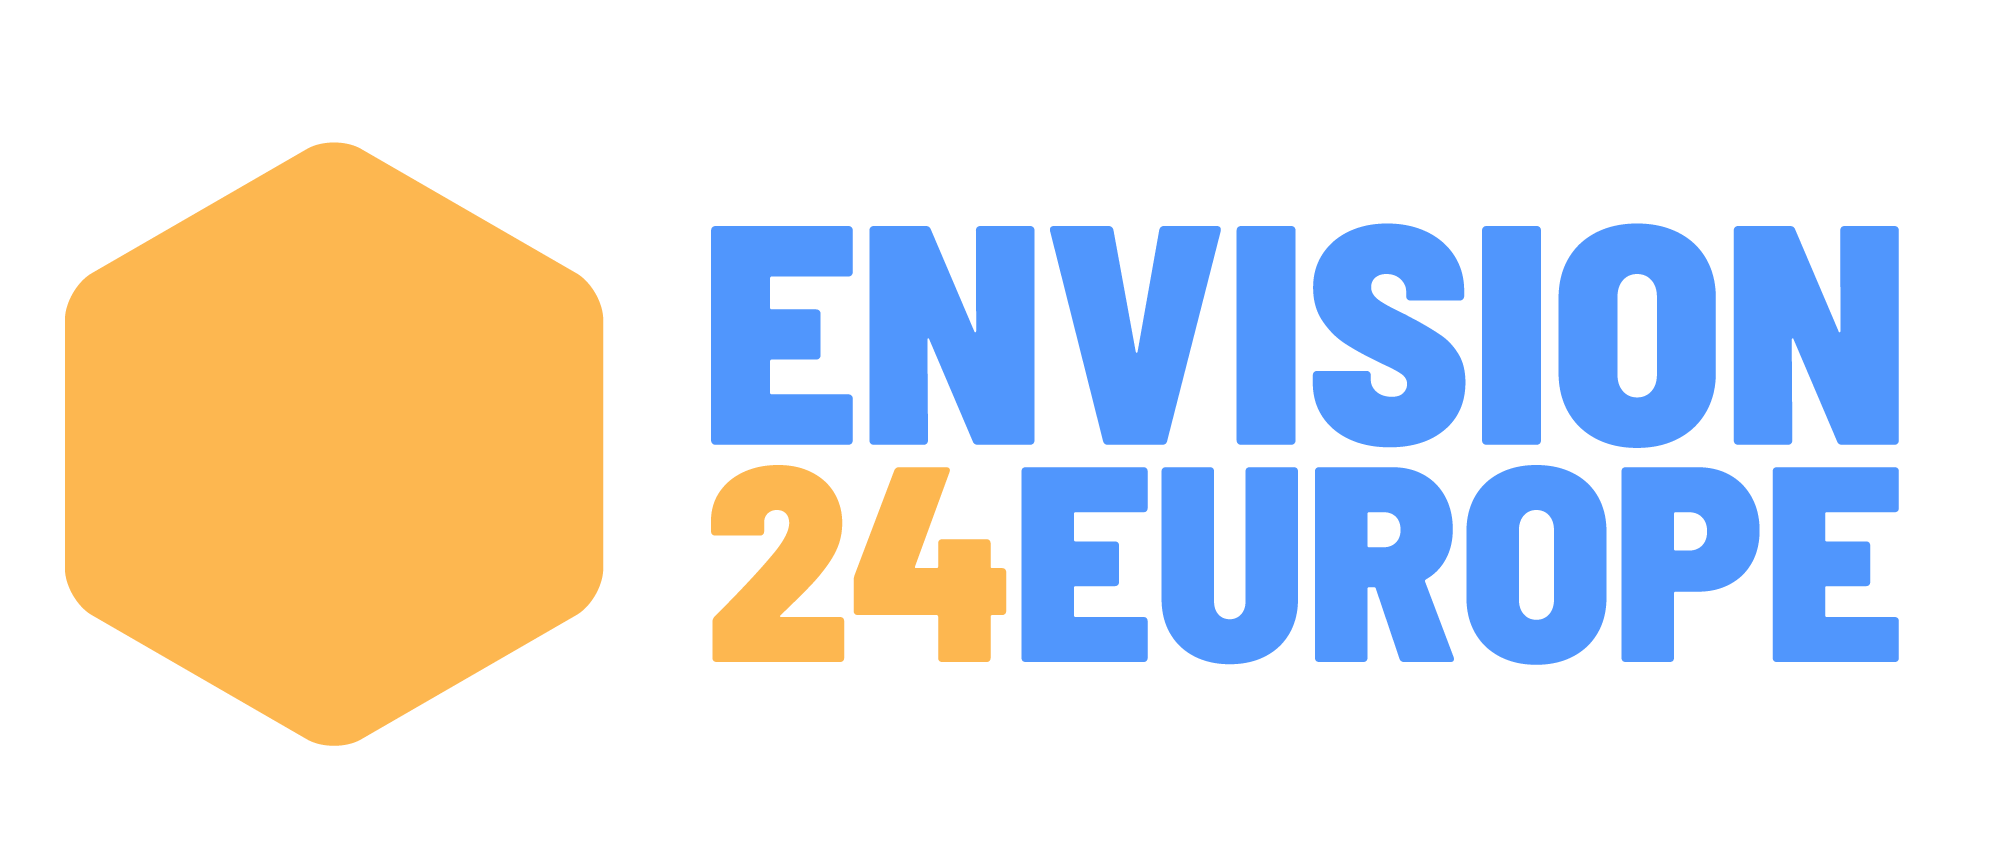 envision-24-europe-logo